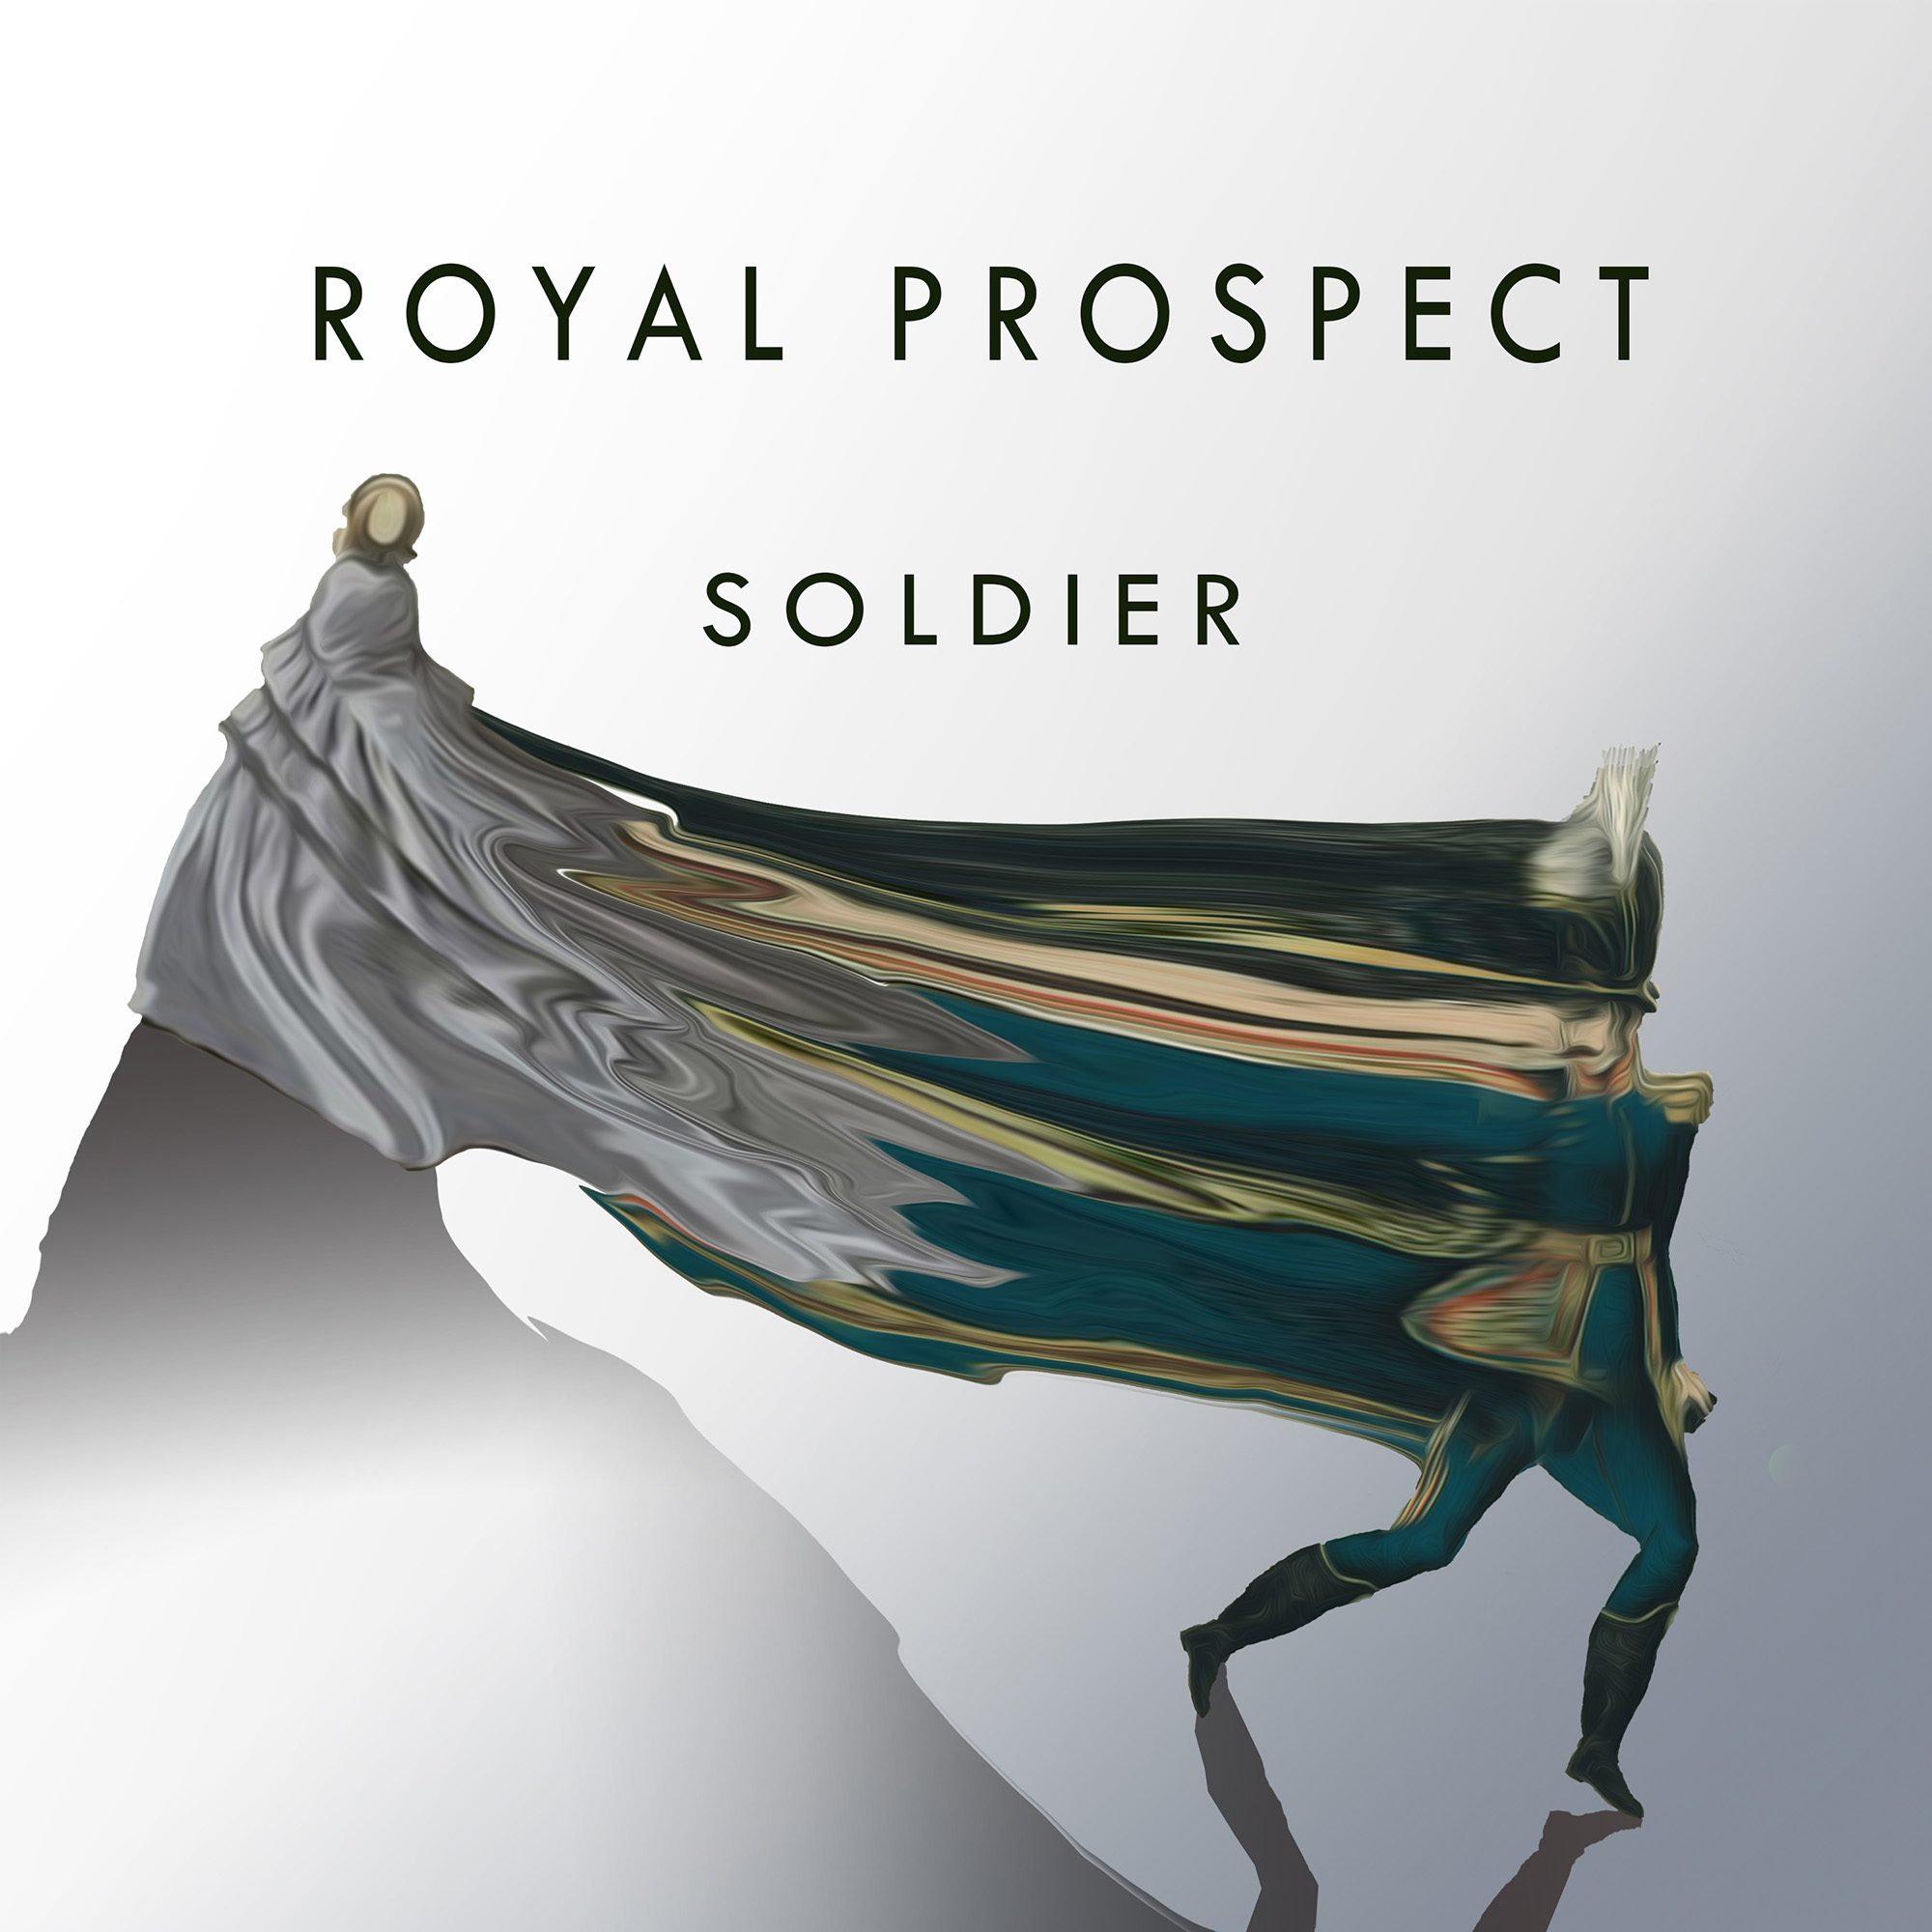 Royal Prospect Soldier